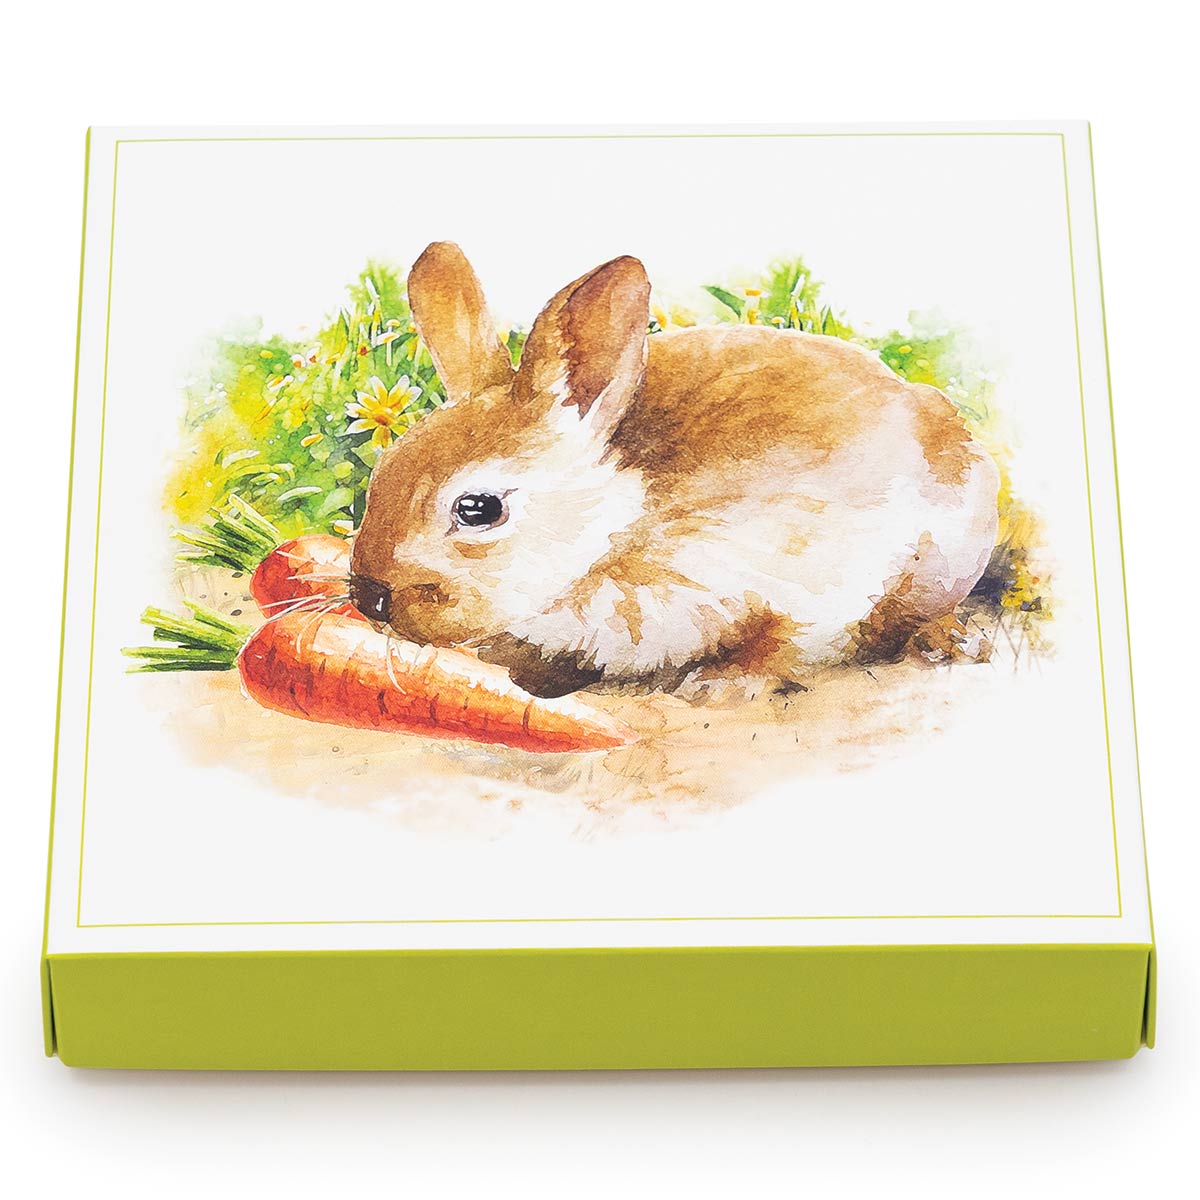 Easter Bunny Gift Box Sugar Free with Milk & Dark chocolate cordial cherries